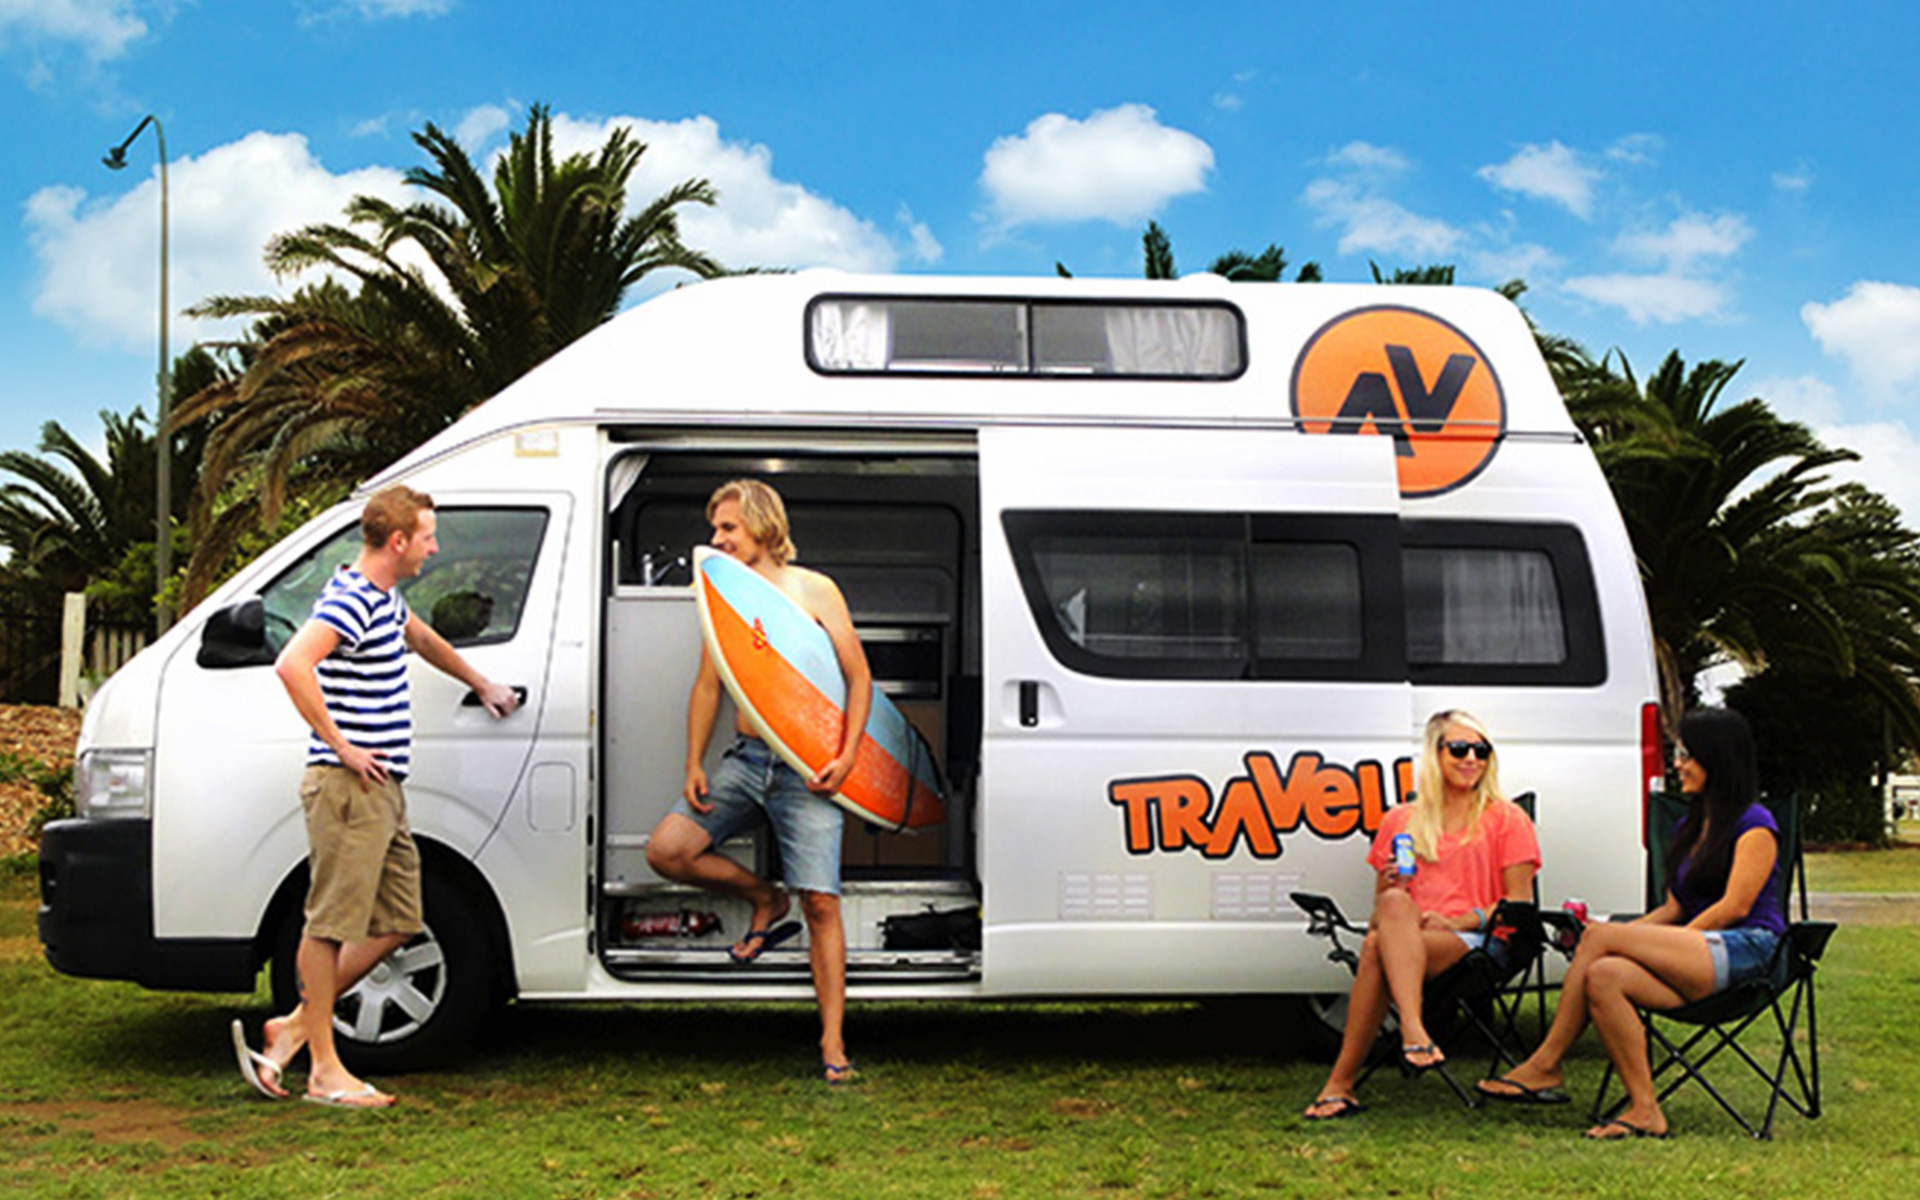 Camping rules. Camper van Australia. Travel in a Camper van. Фольксваген Тревелер путешествие. Имиджи Camper.